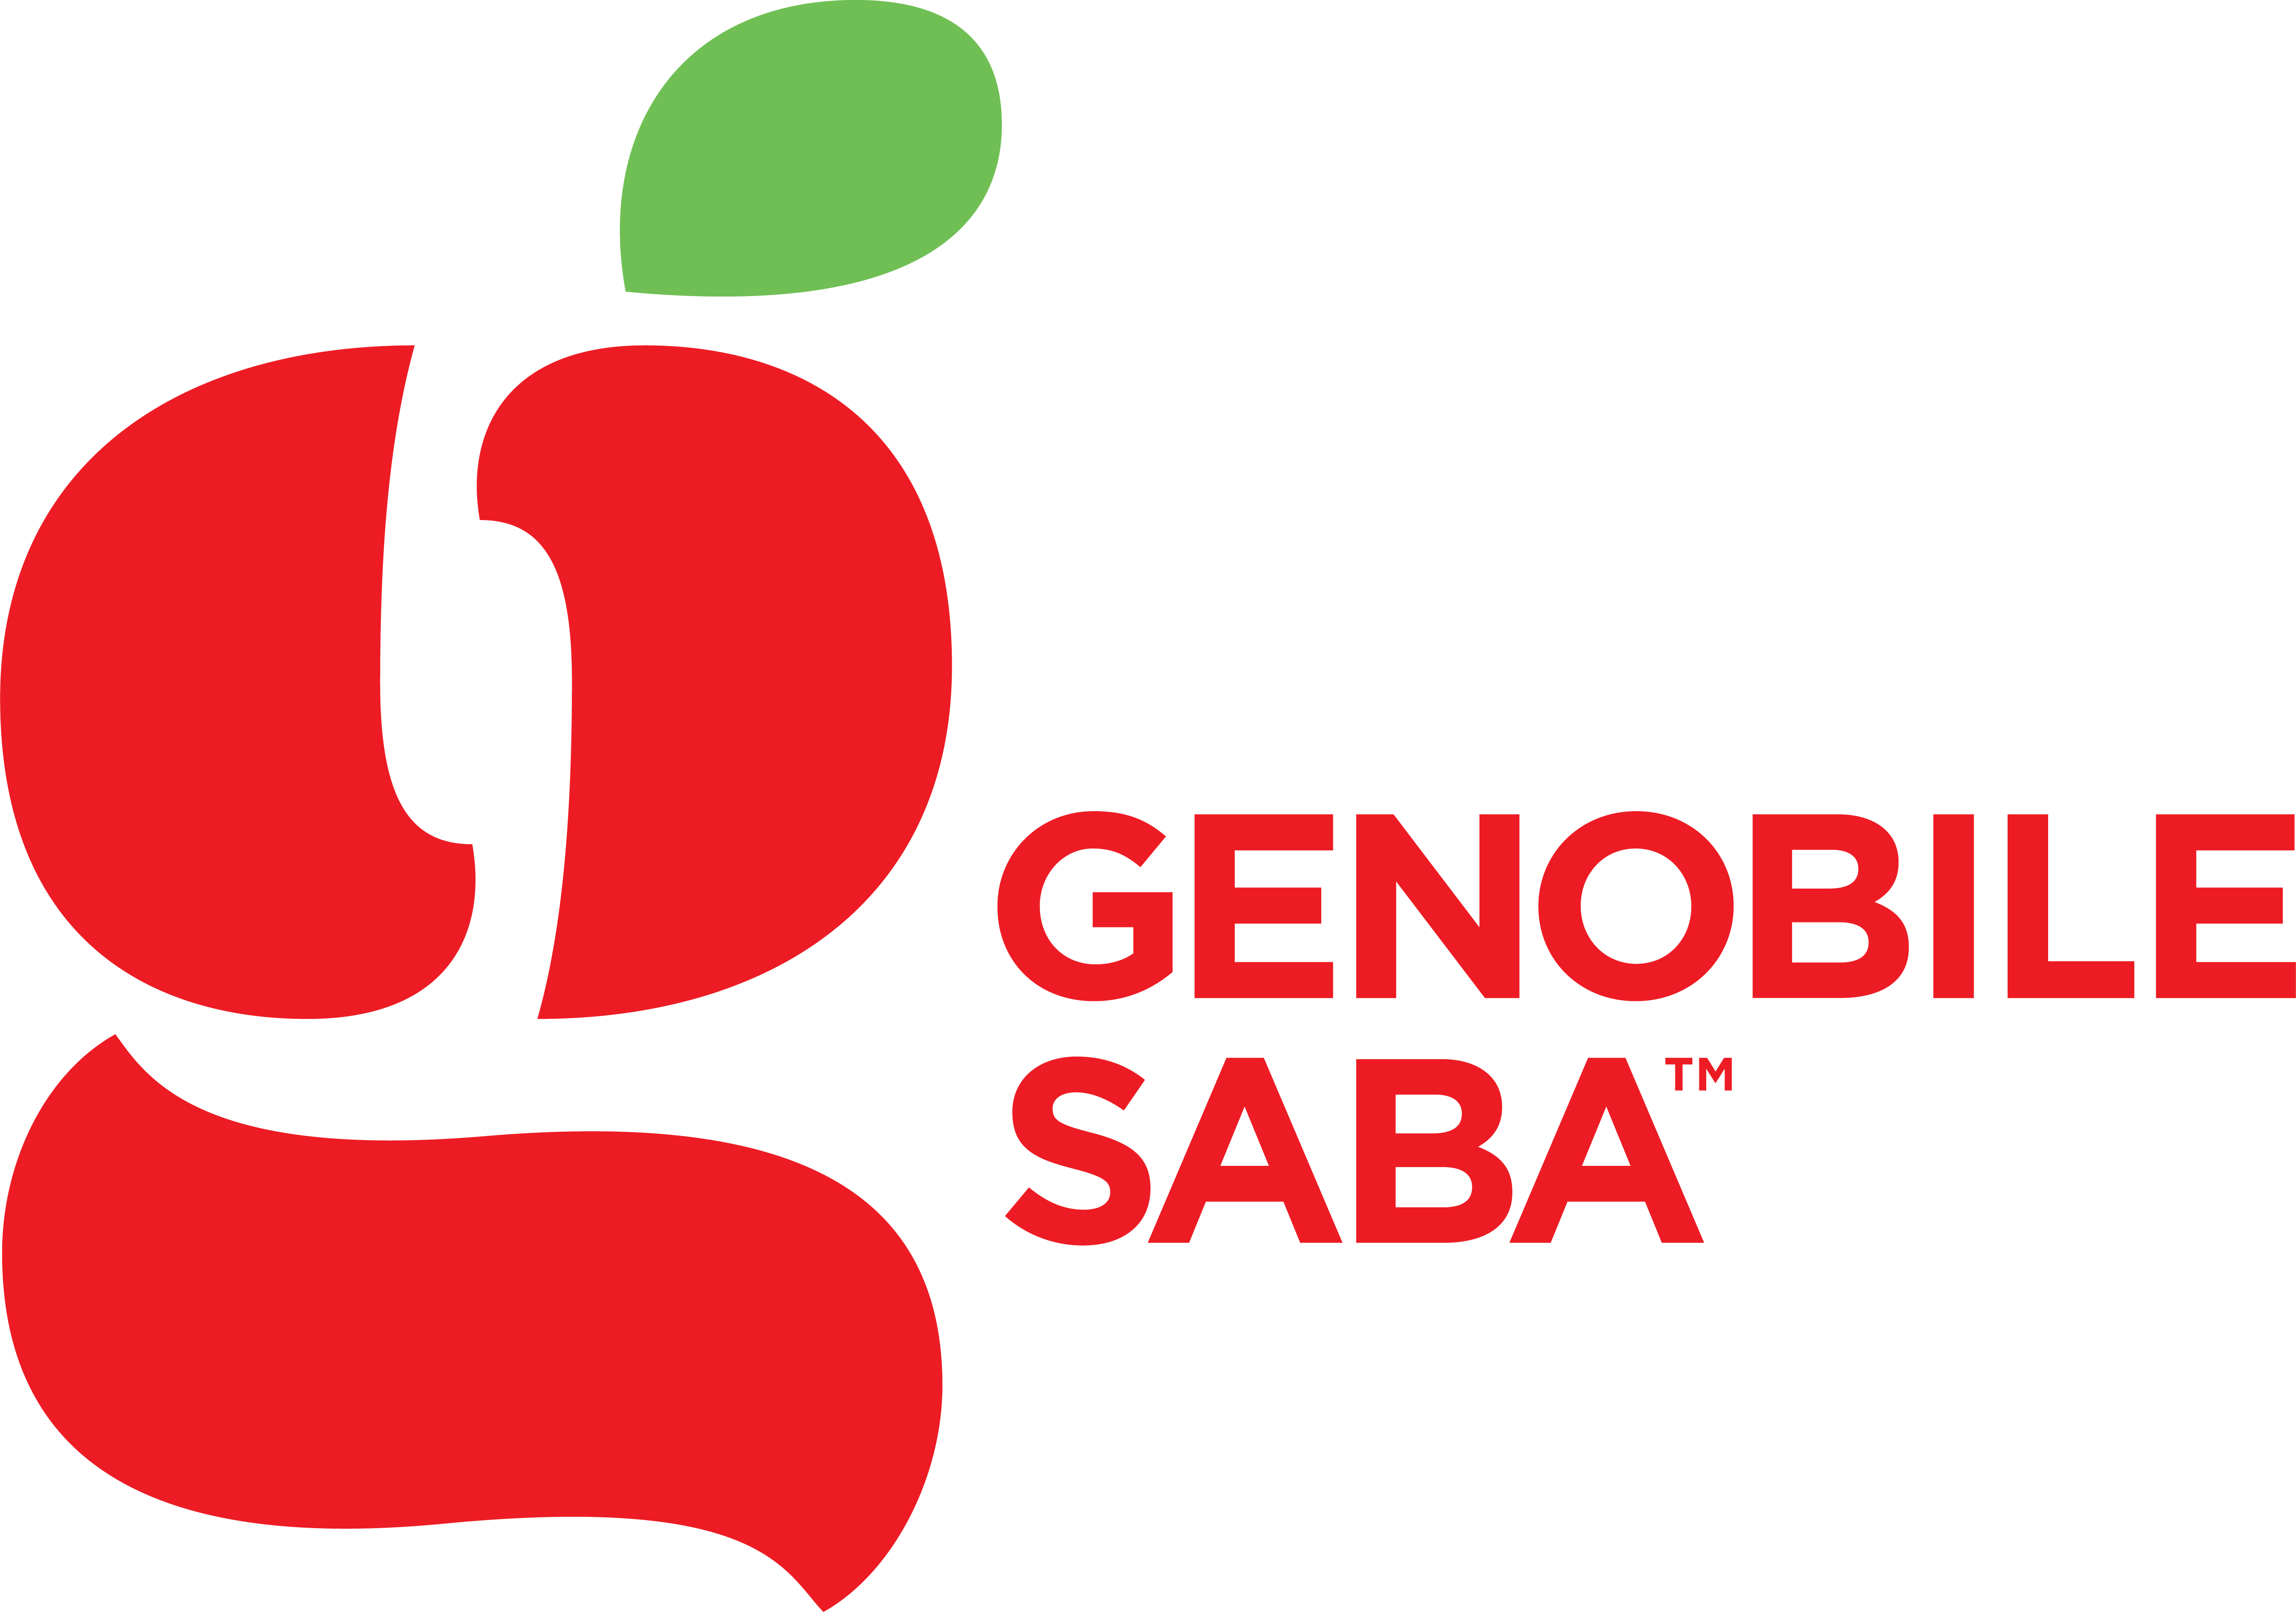 Genobile Saba